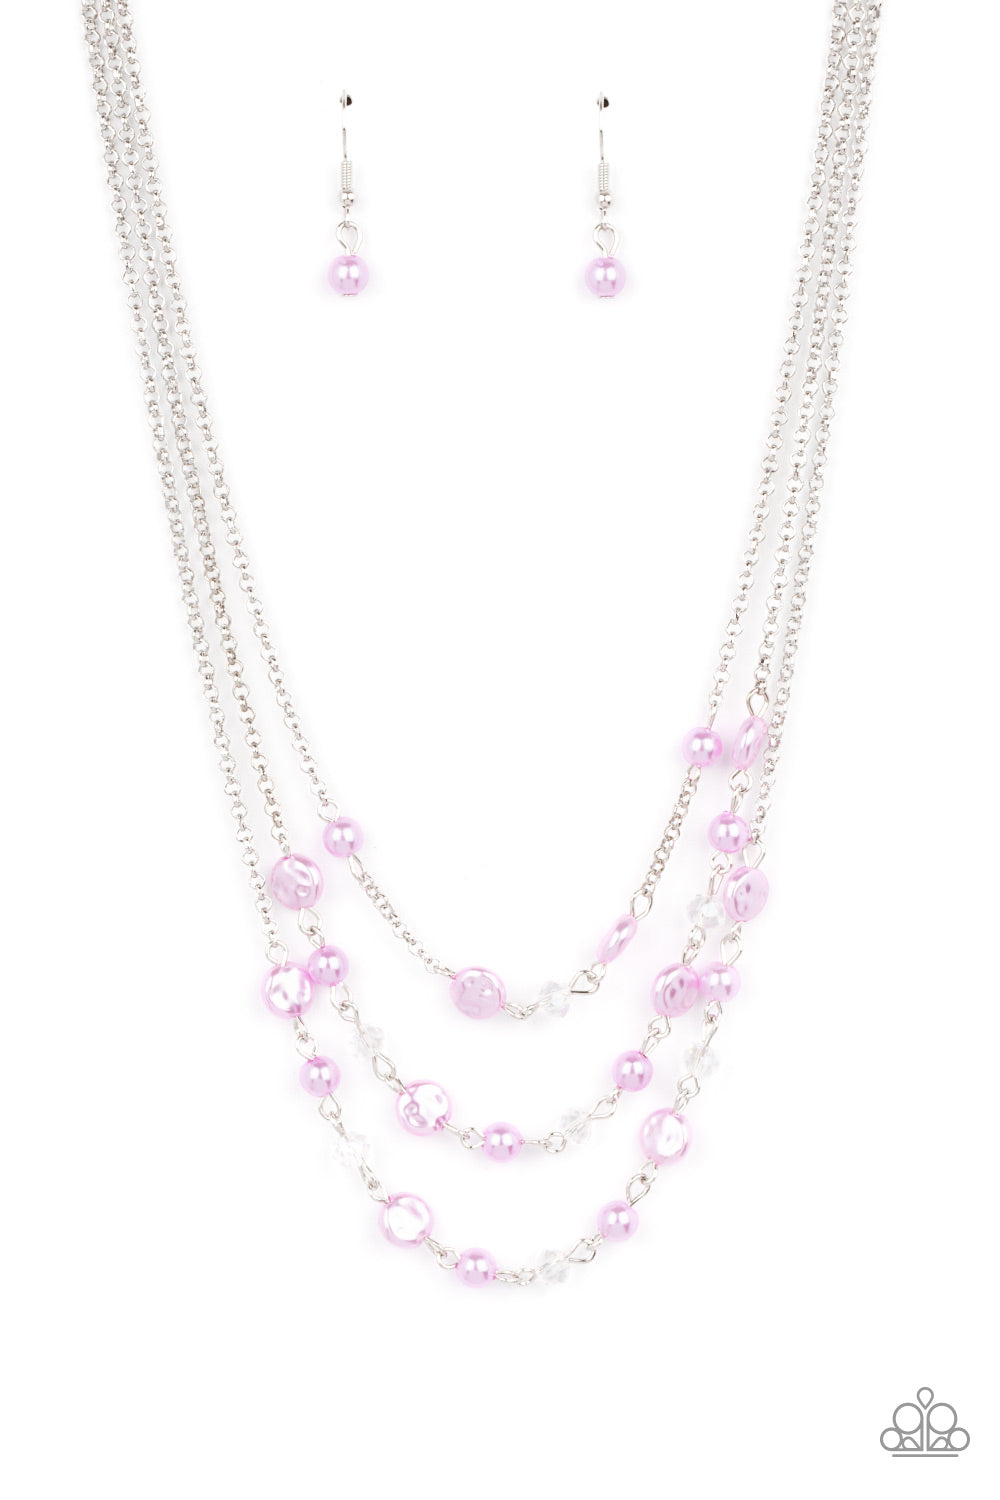 Let The Record GLOW - Purple Necklace Set - Princess Glam Shop